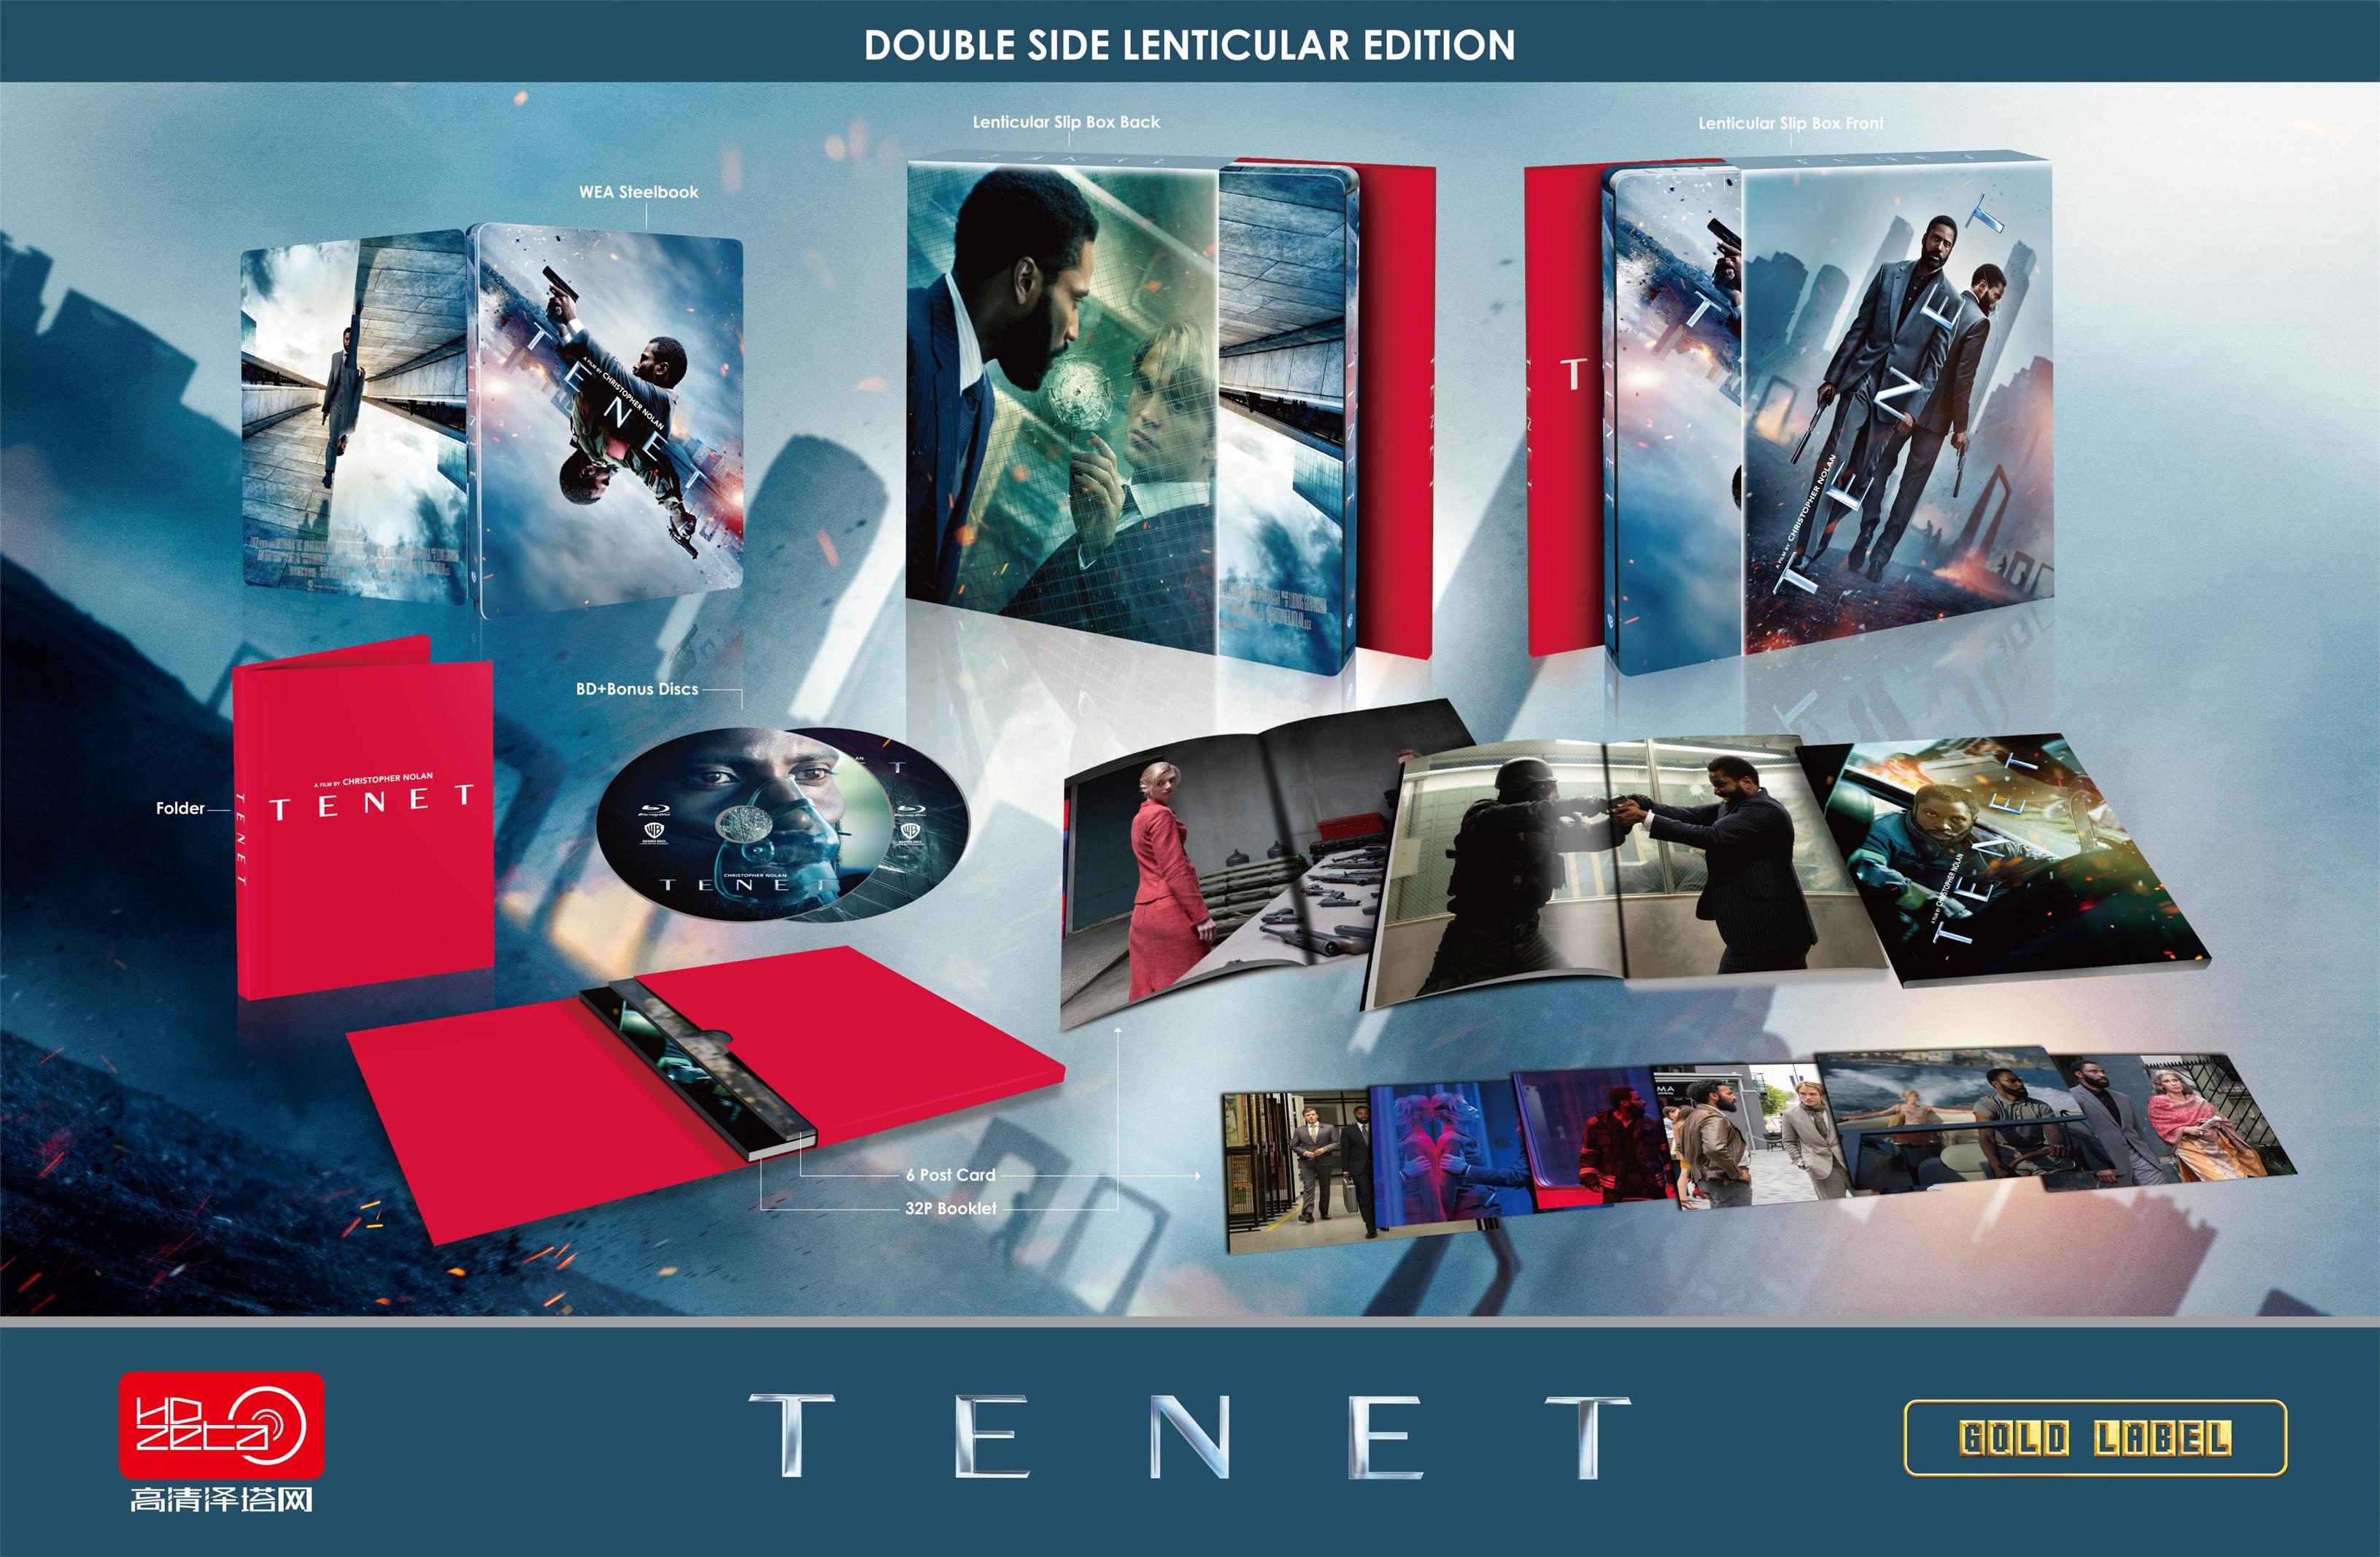 Tenet HDzeta Exclusive Double Lenti Edition